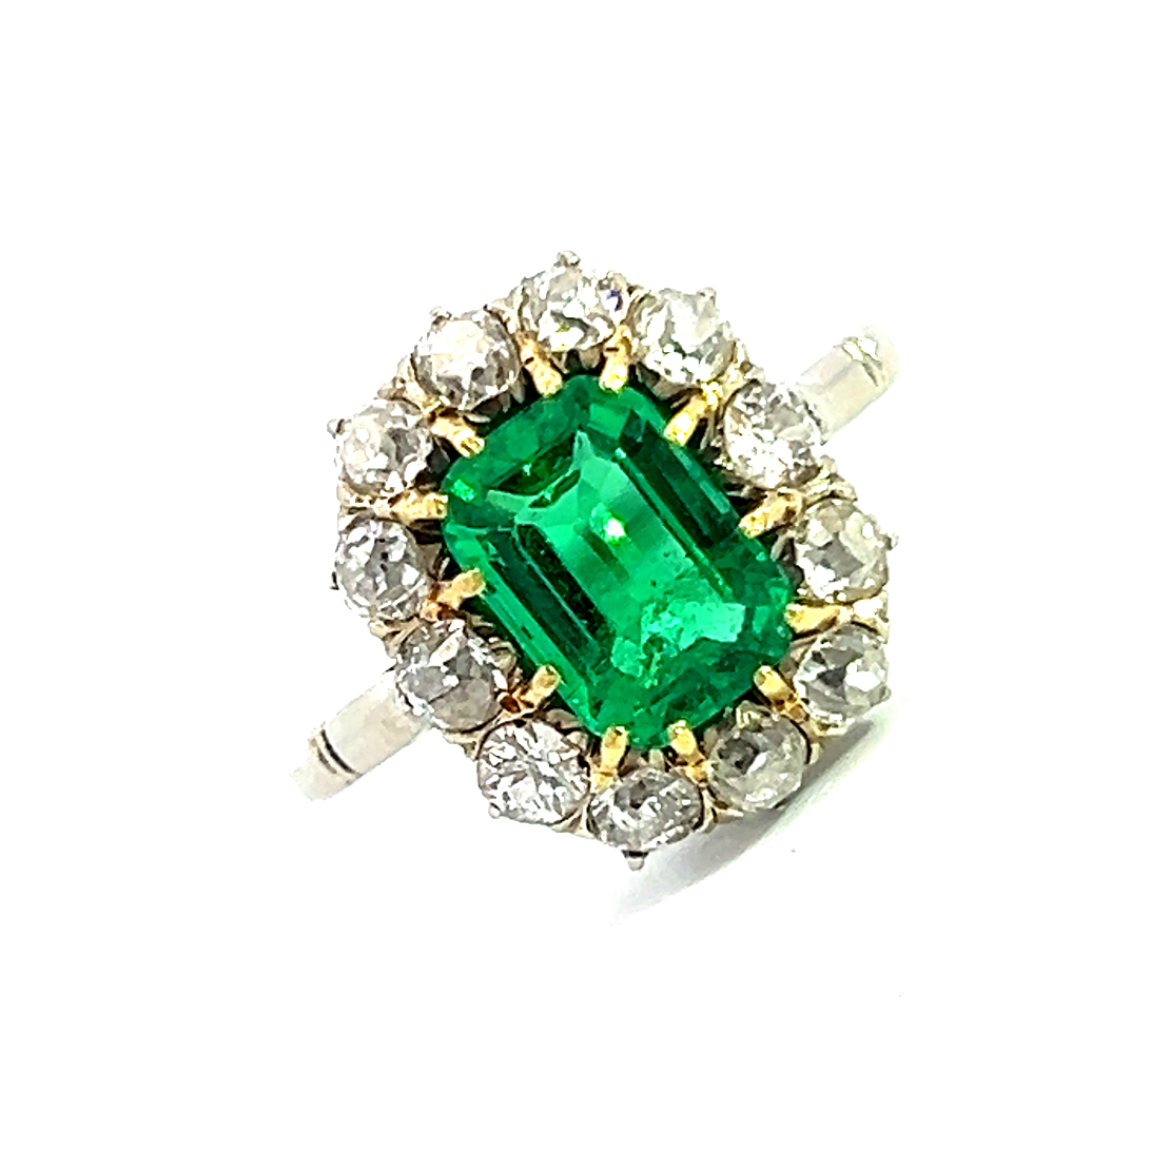 An Edwardian Emerald and Diamond Ring